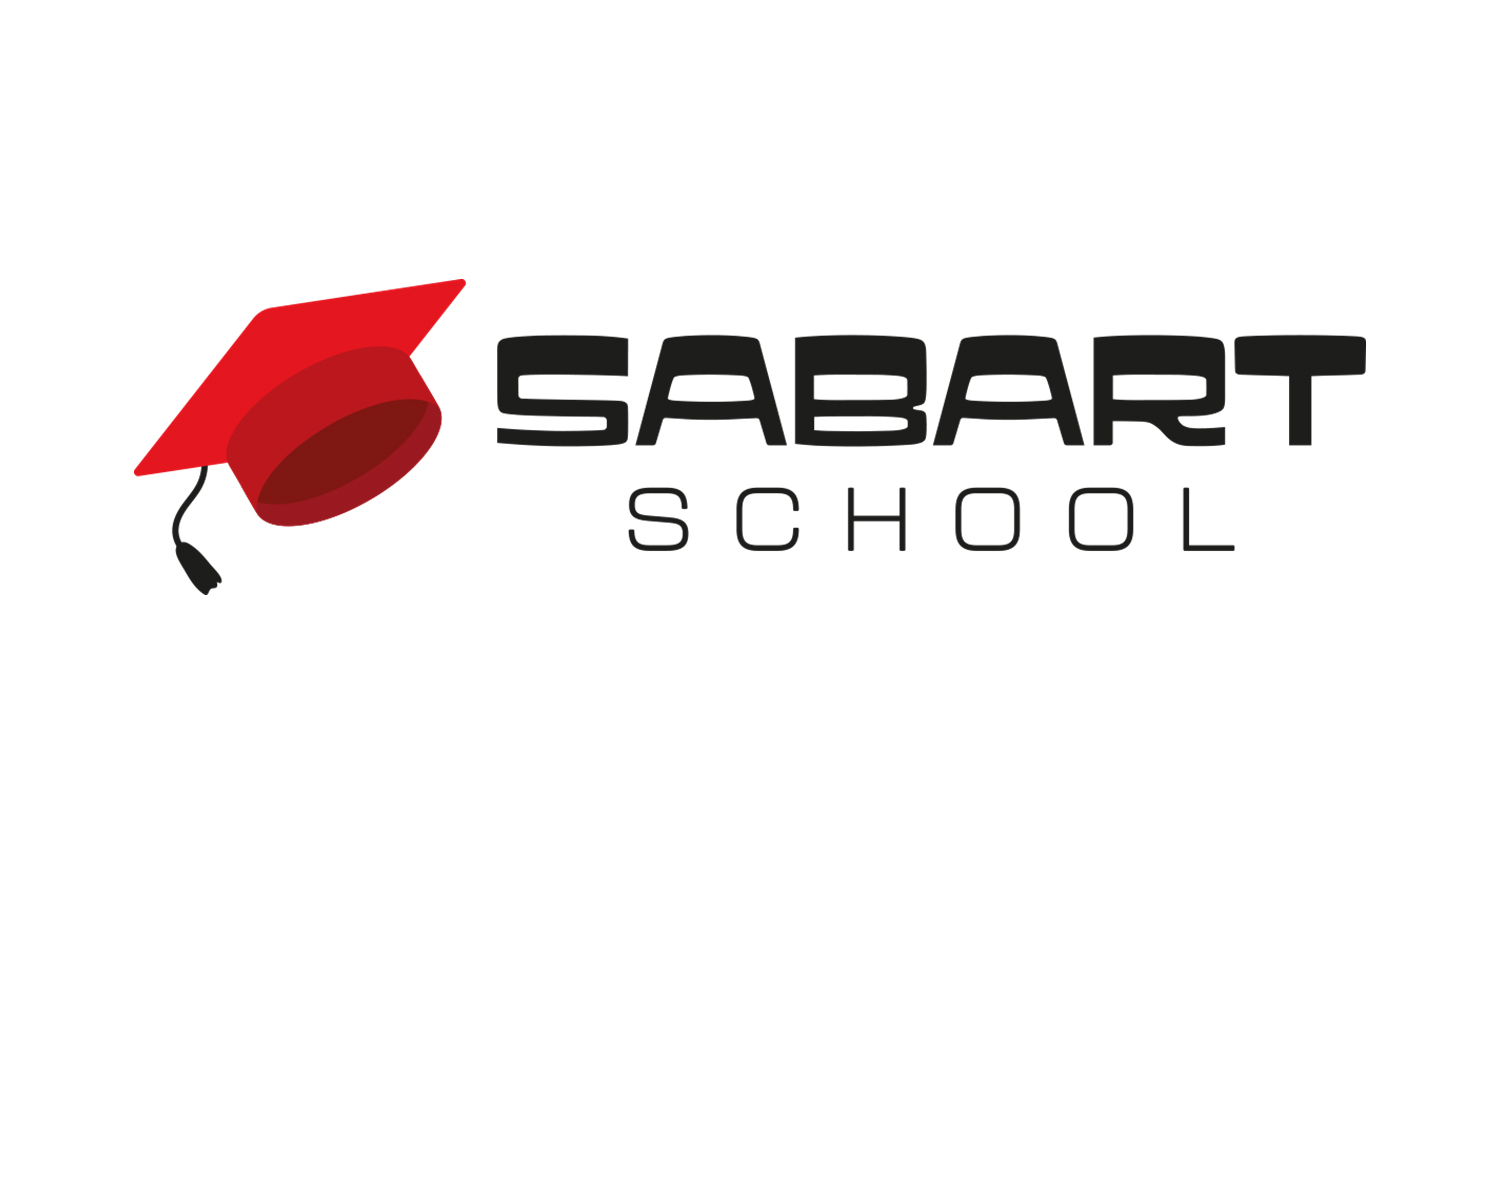 Sabart school